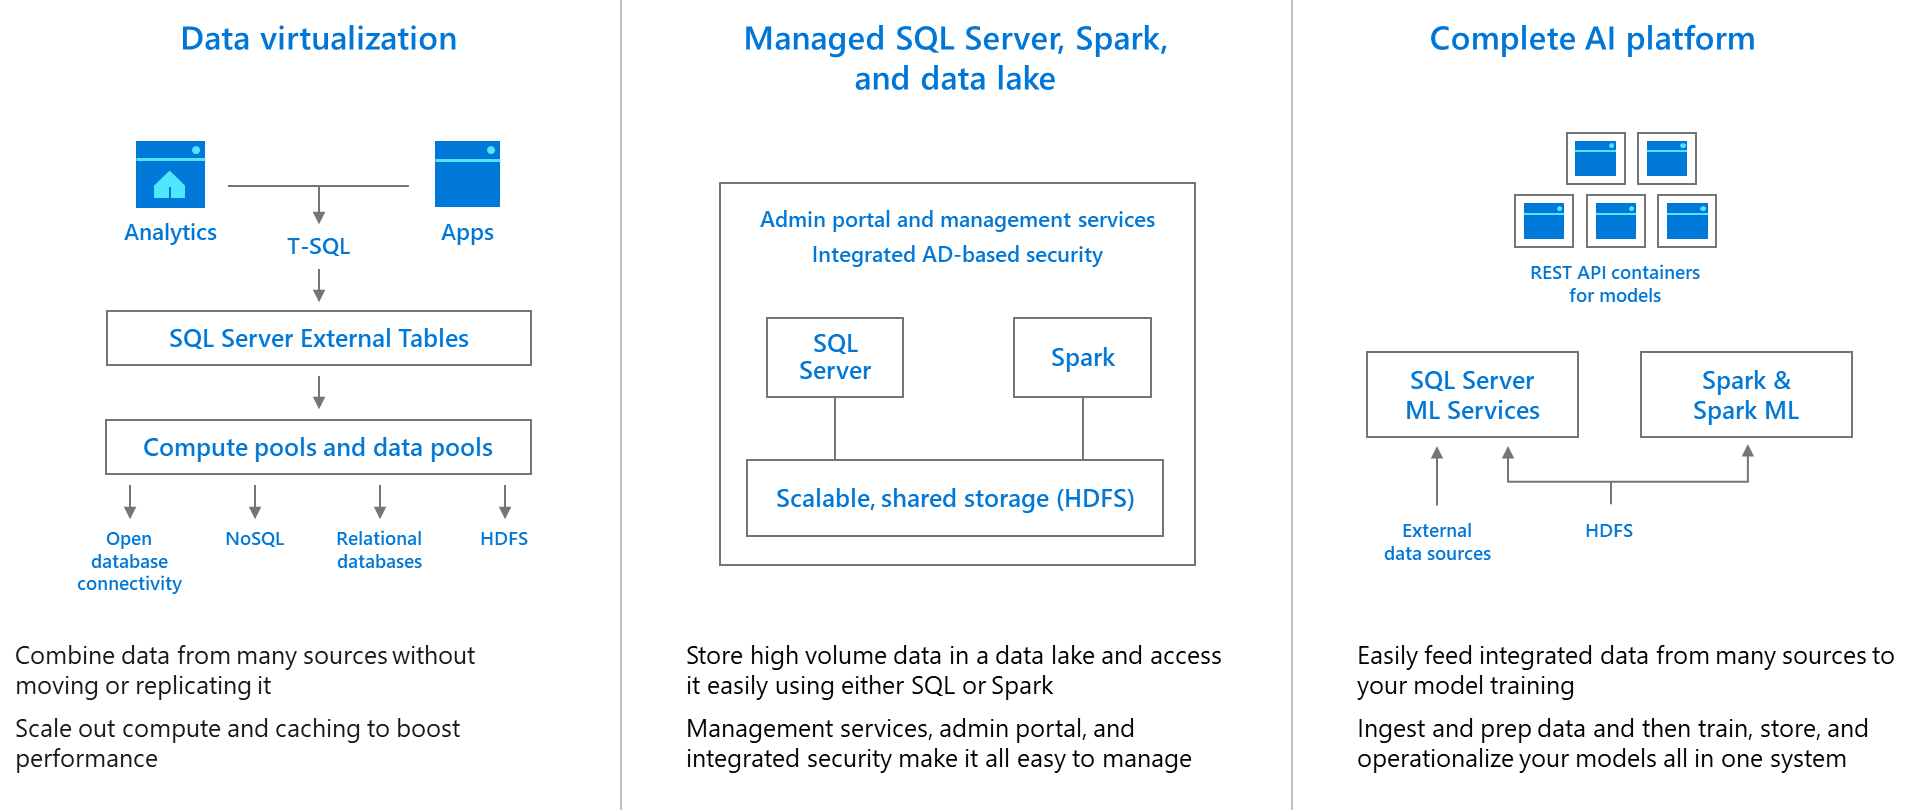 SQL Server 2019 installation errors Data-virtualization-managed-sql-server-spark-and-data-lake-complete-ai-platform.png